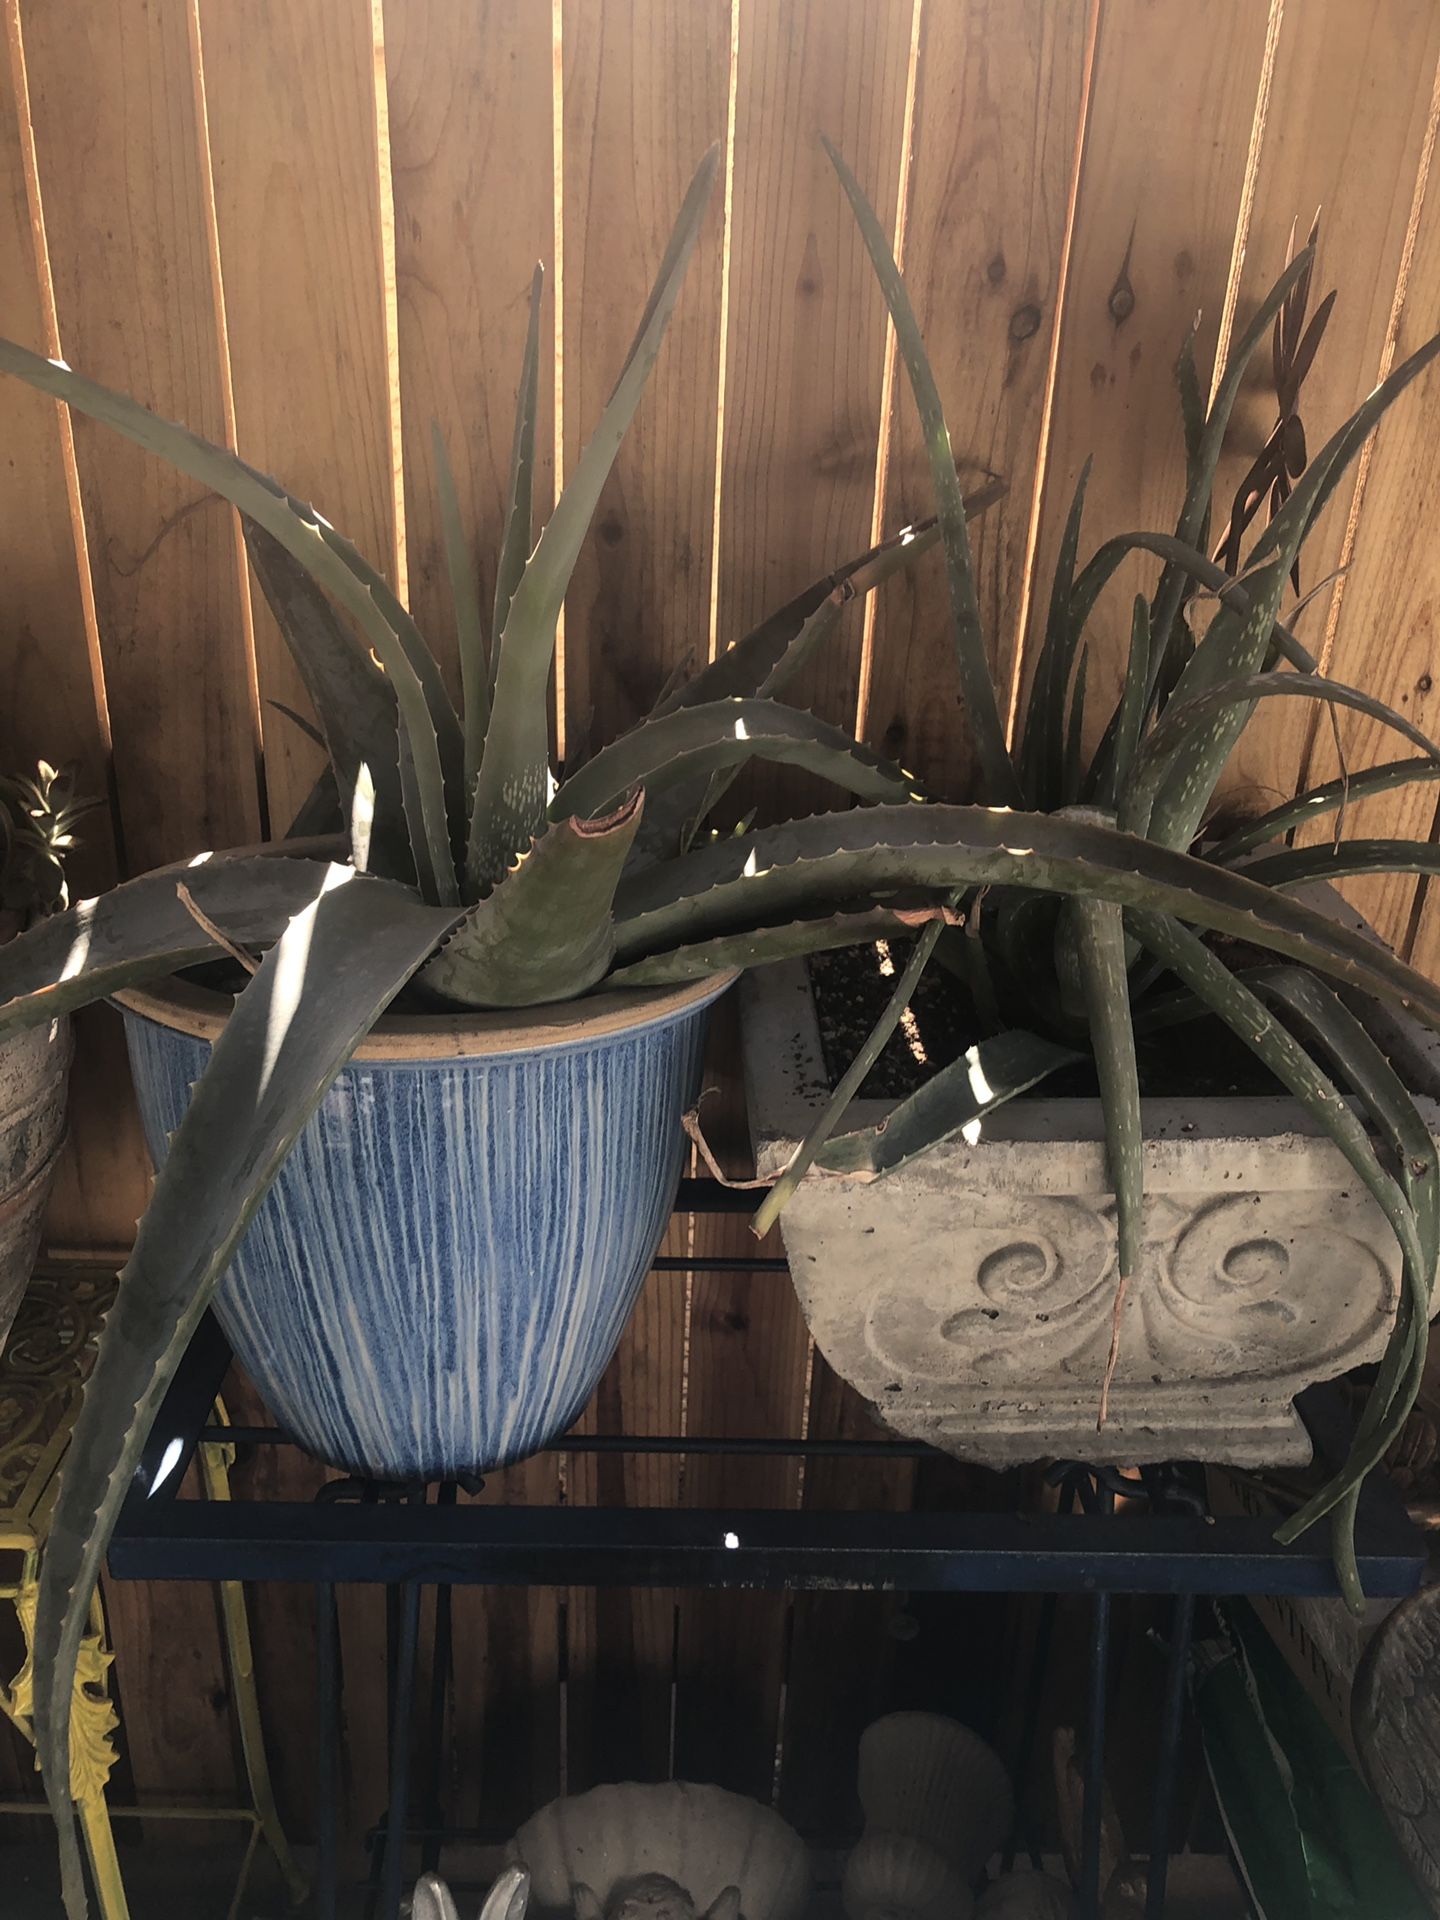 Aloe Vera plants is pot